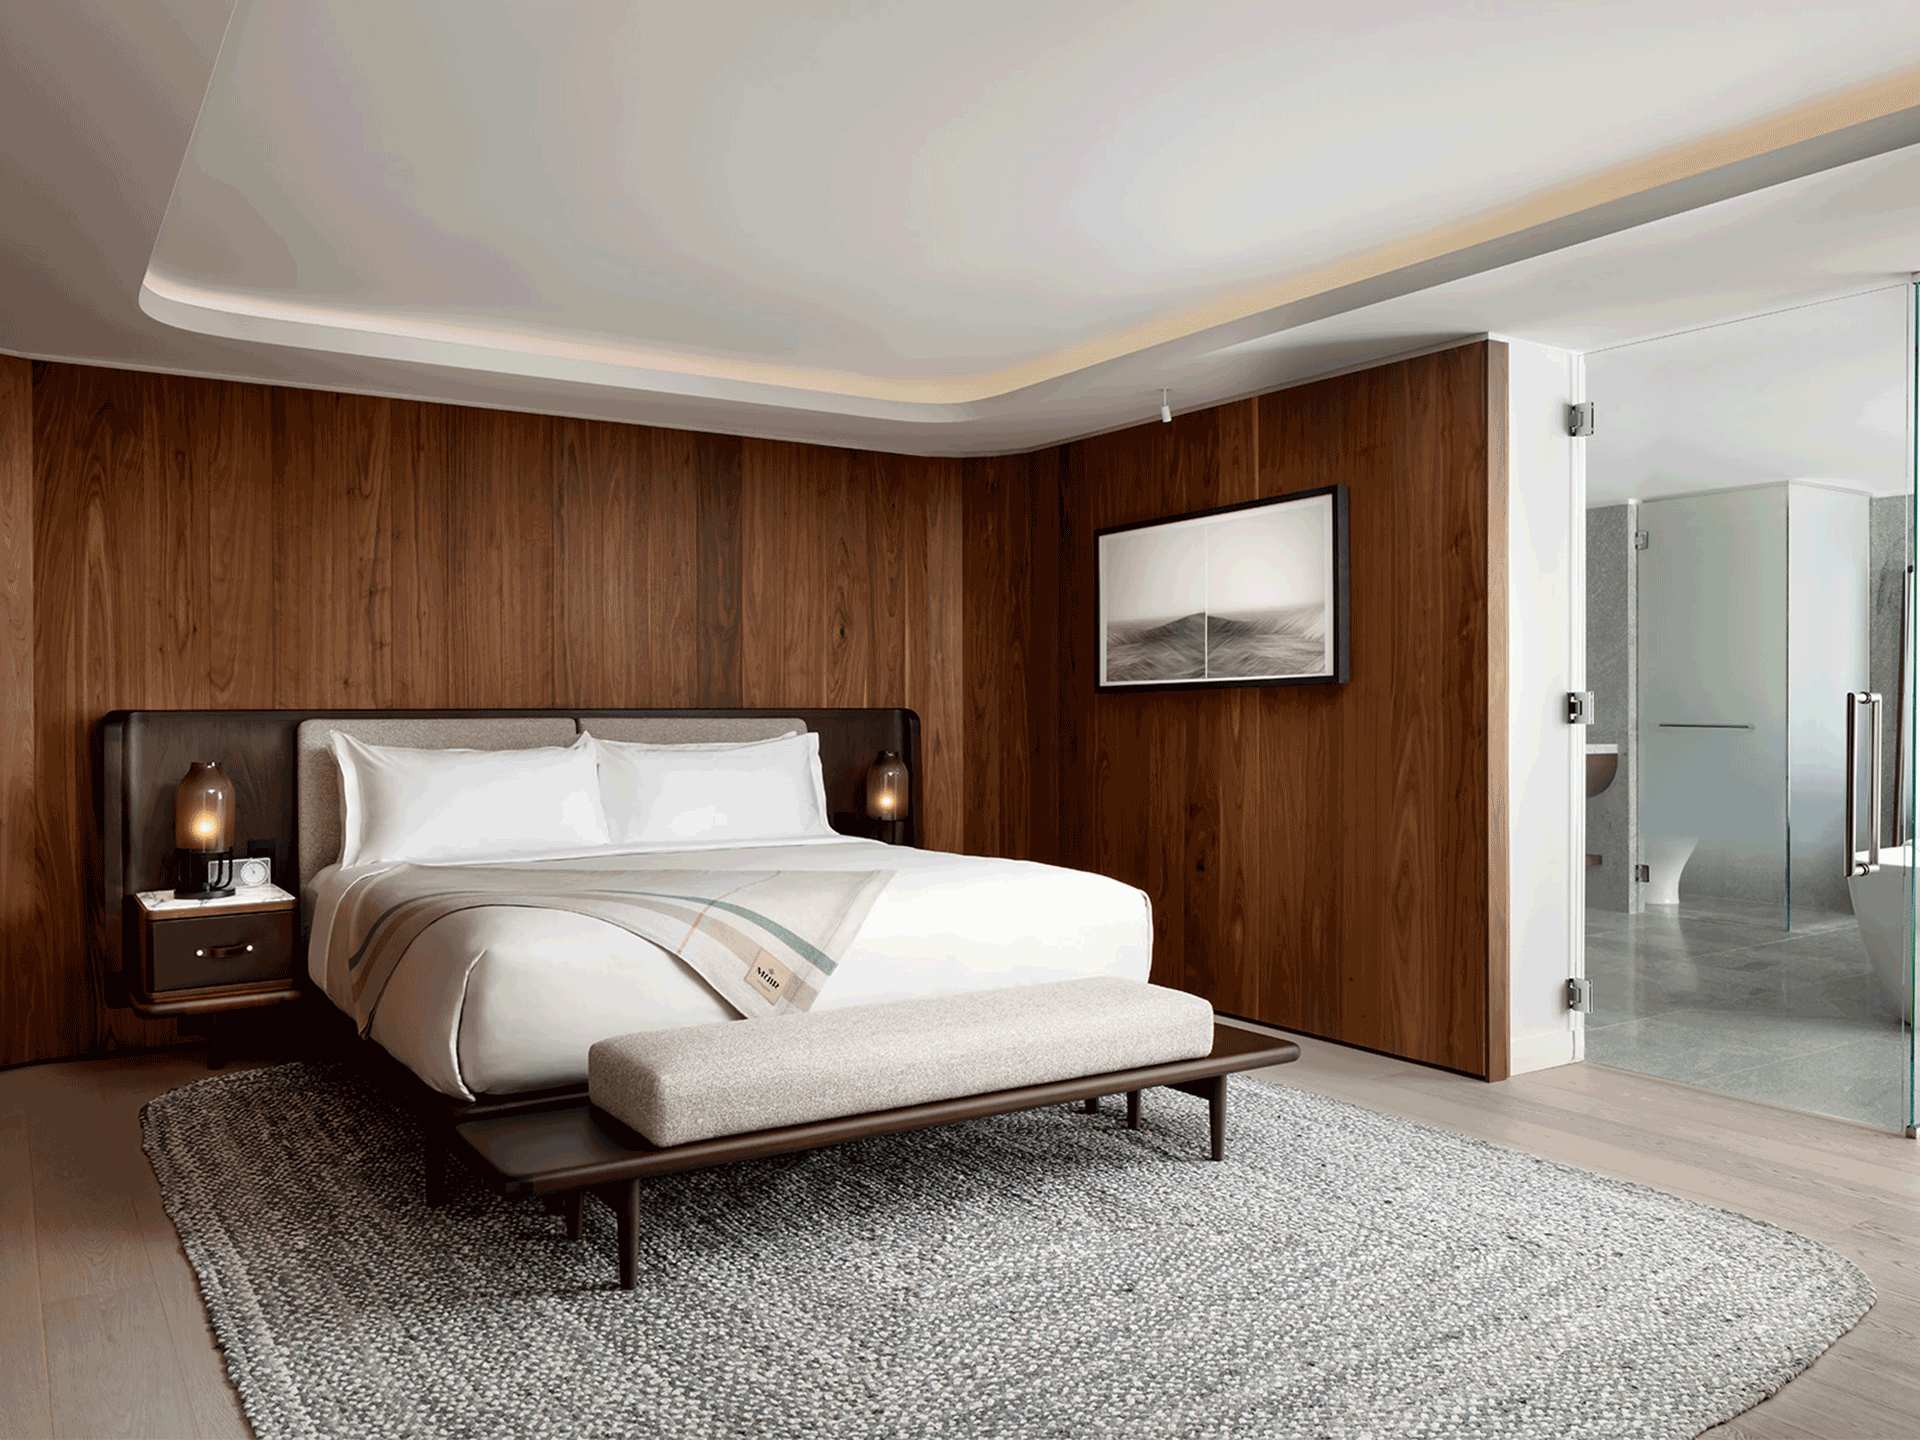 Muir Hotel Halifax | Wood-panelled suite